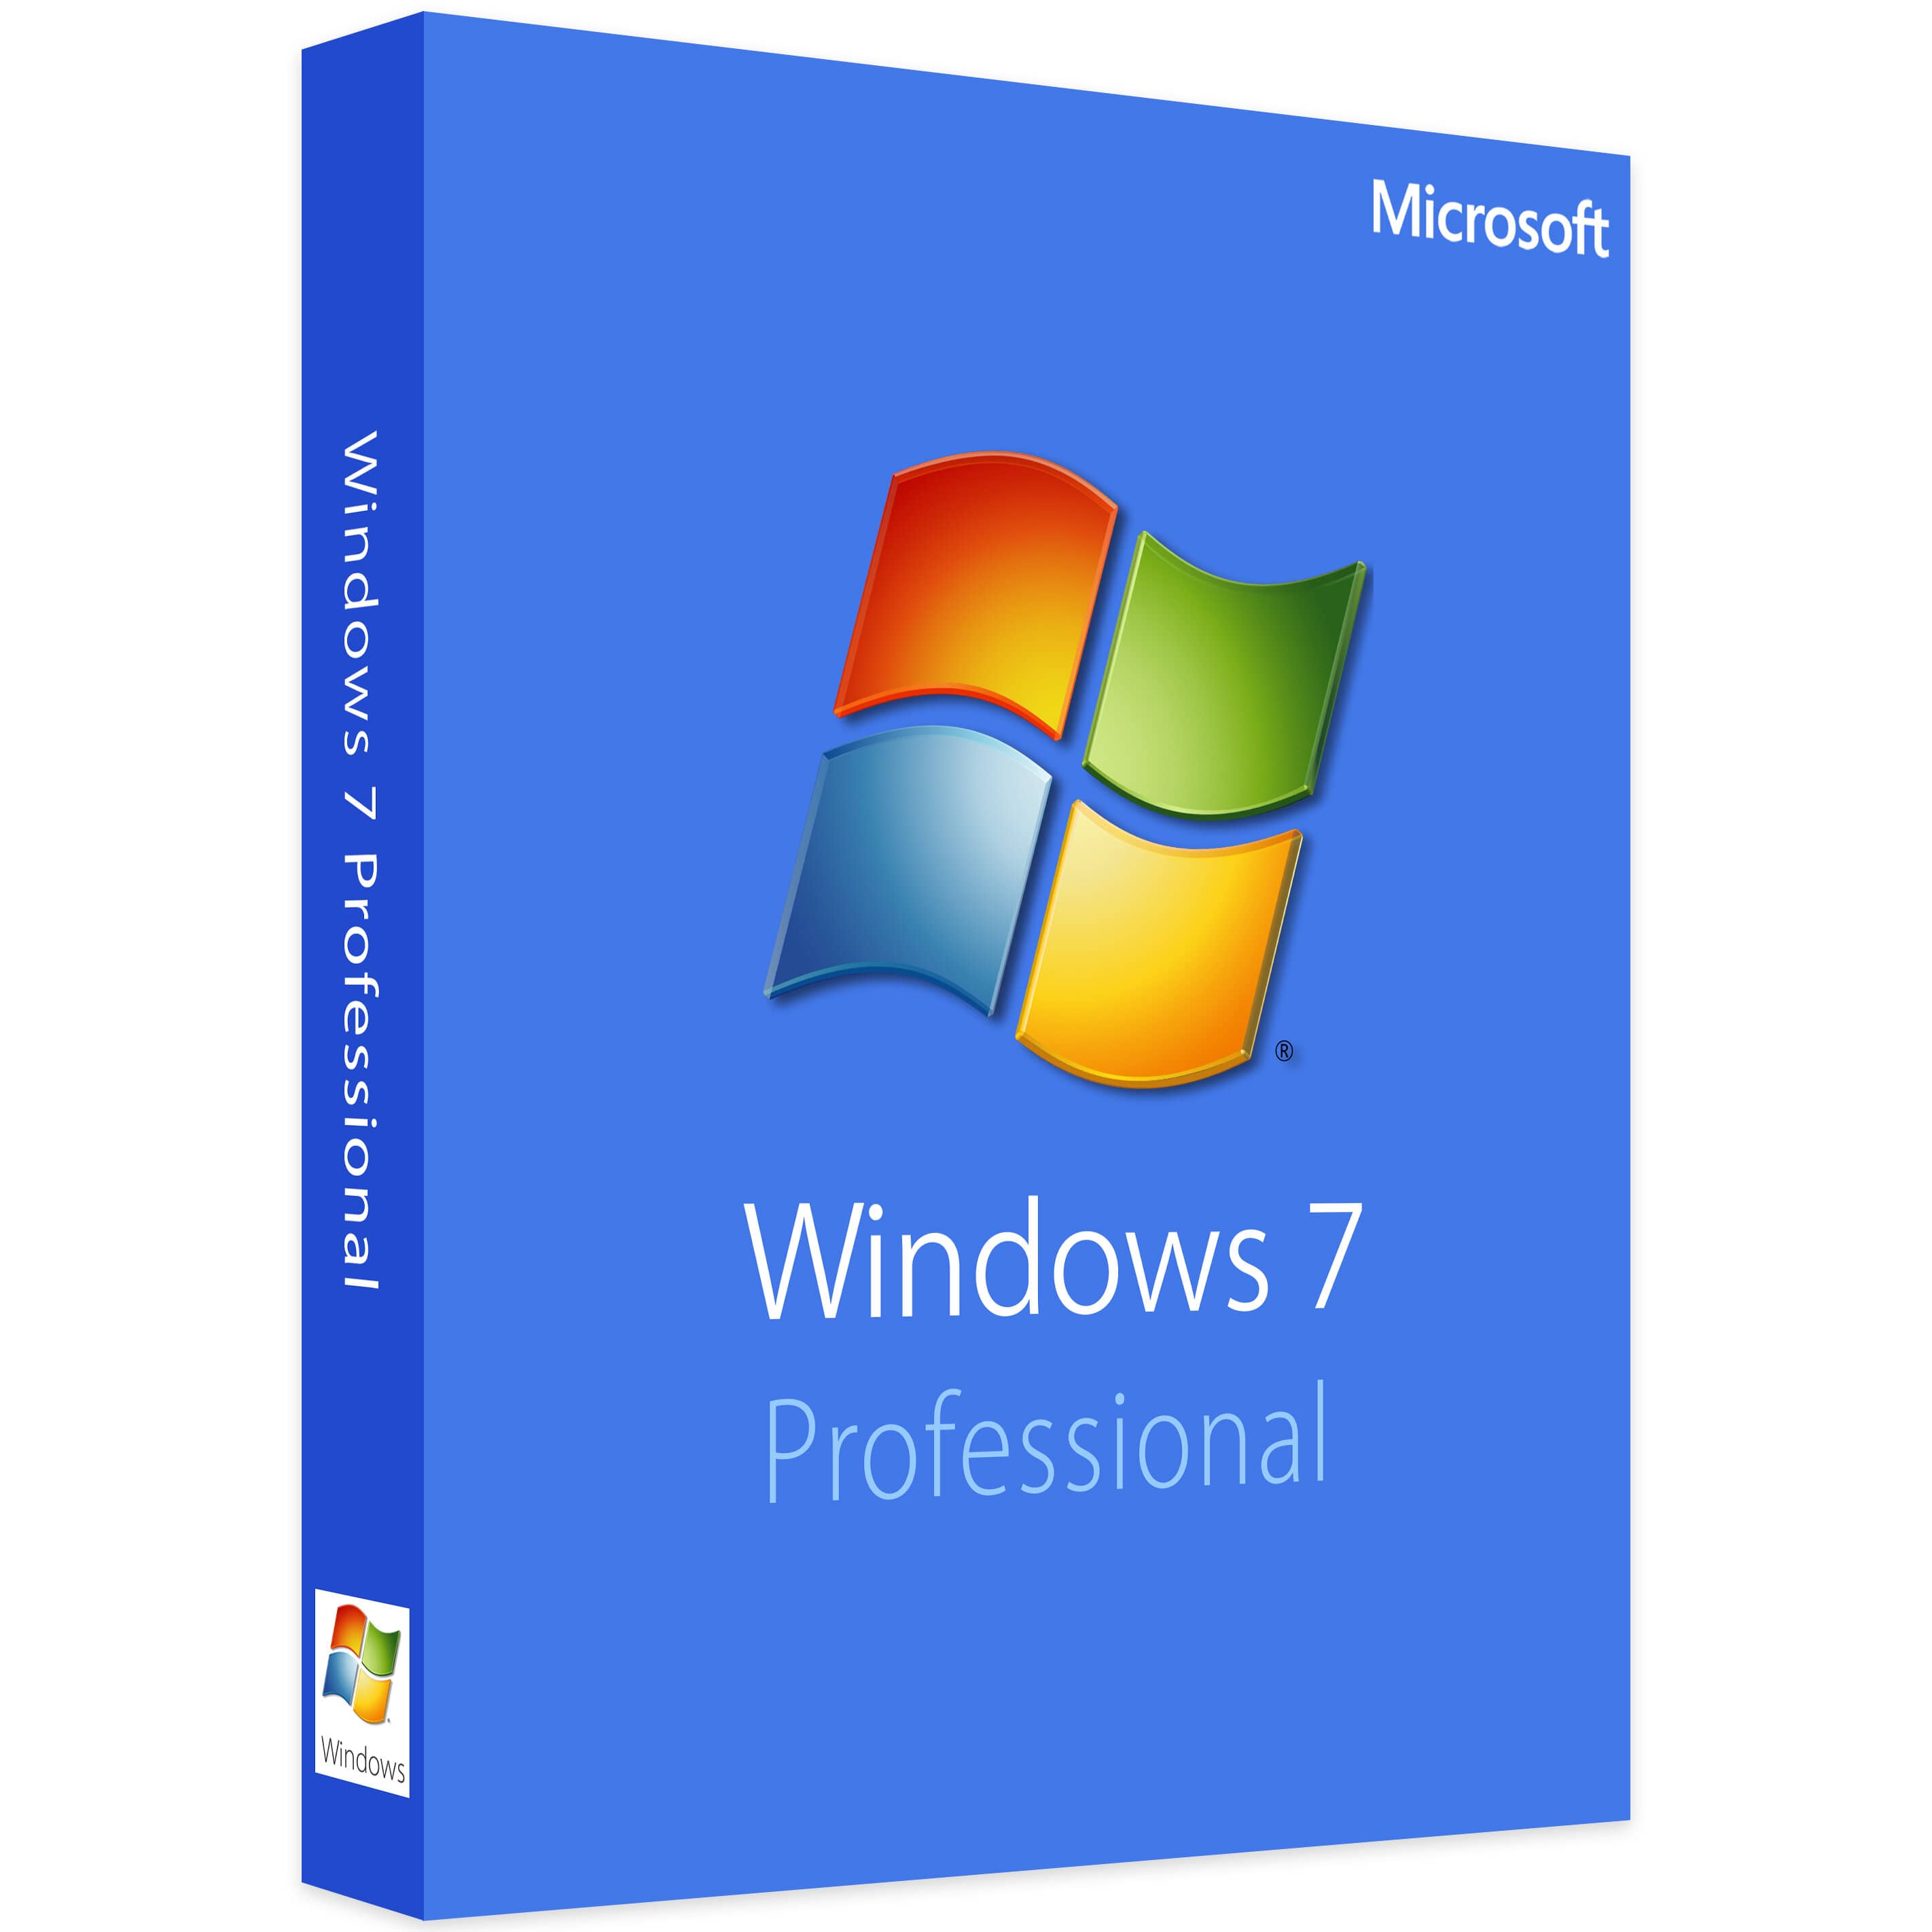 Microsoft Windows 7 Professional 32/64 Bit - Lifetime License 1PC